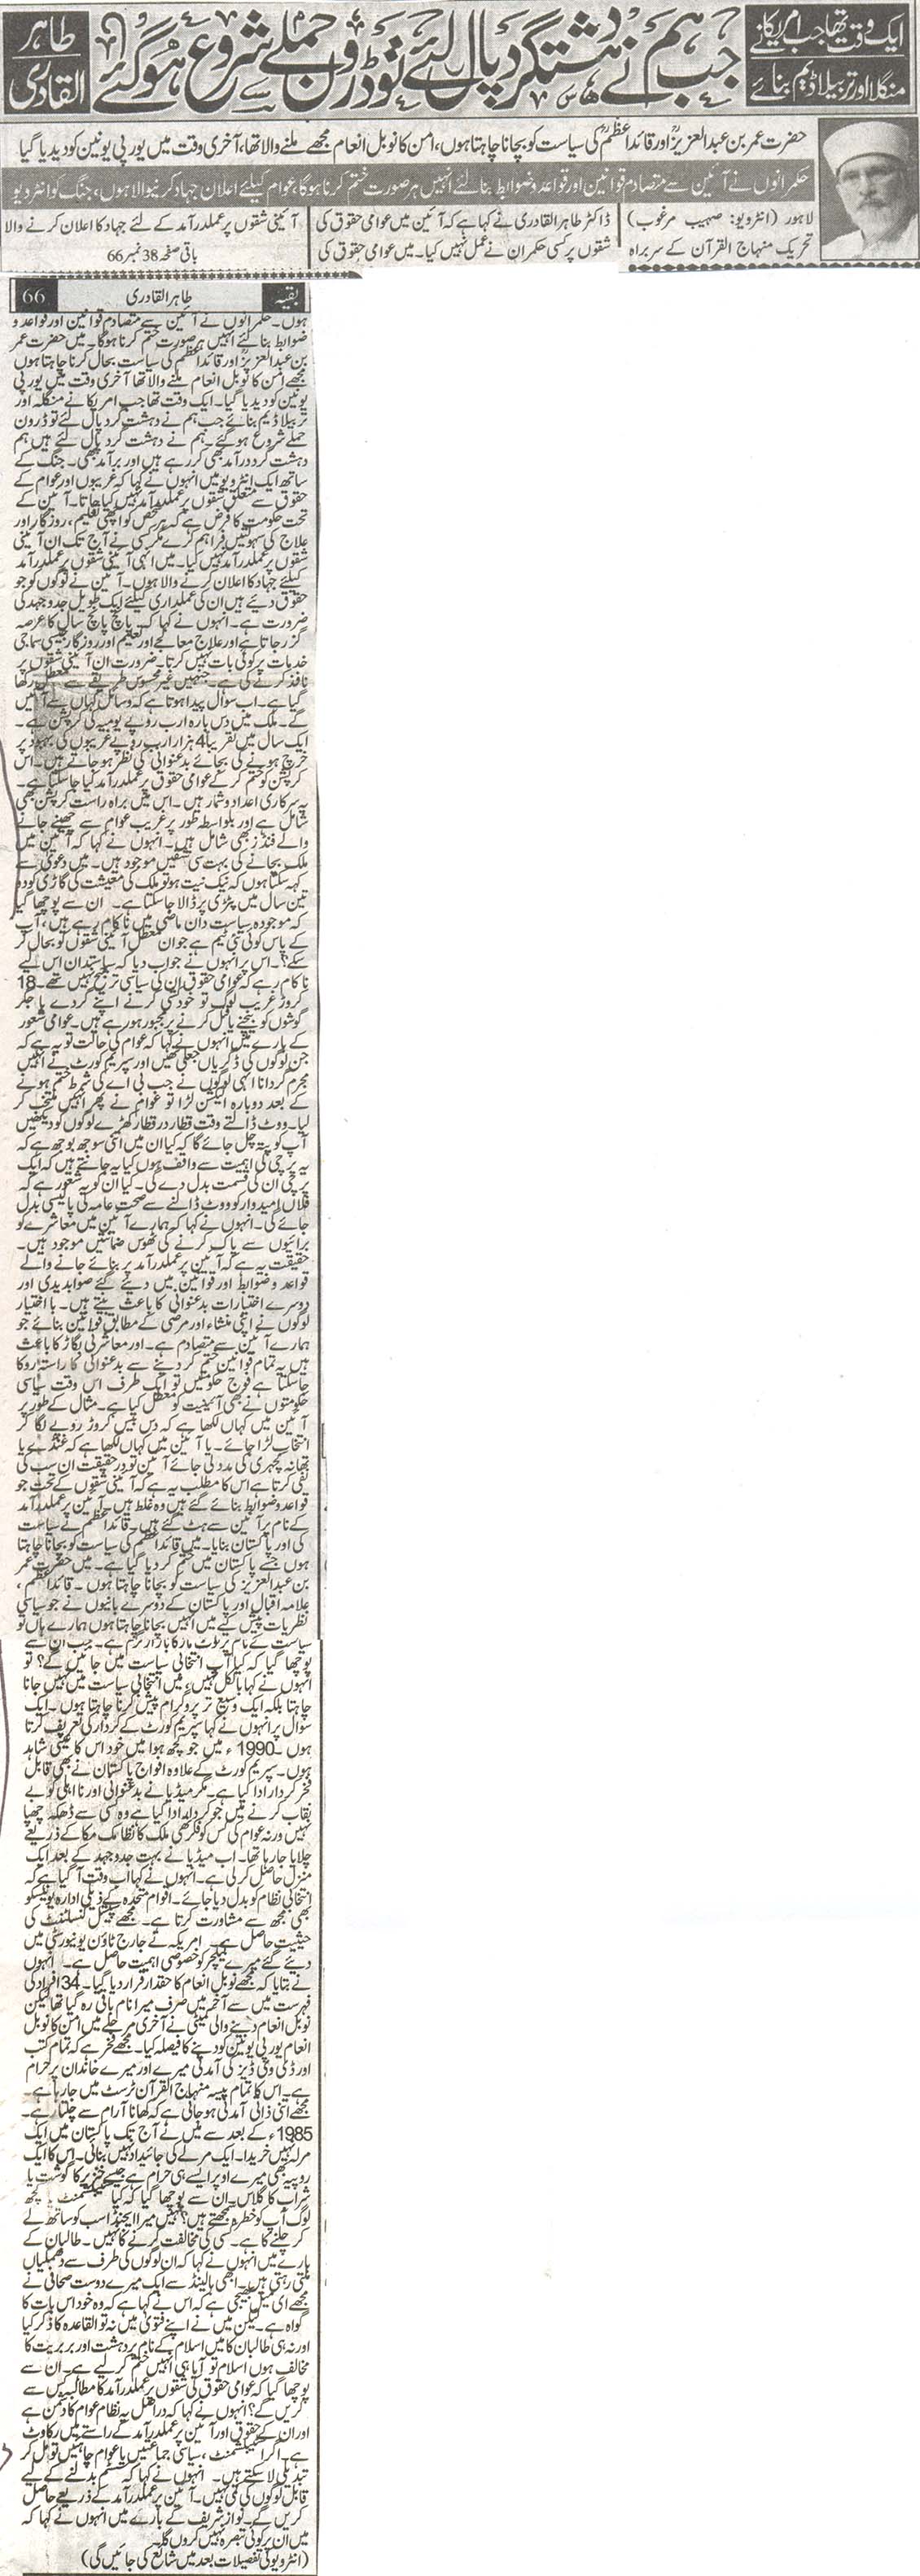 Minhaj-ul-Quran  Print Media Coveragedaily jang page 2